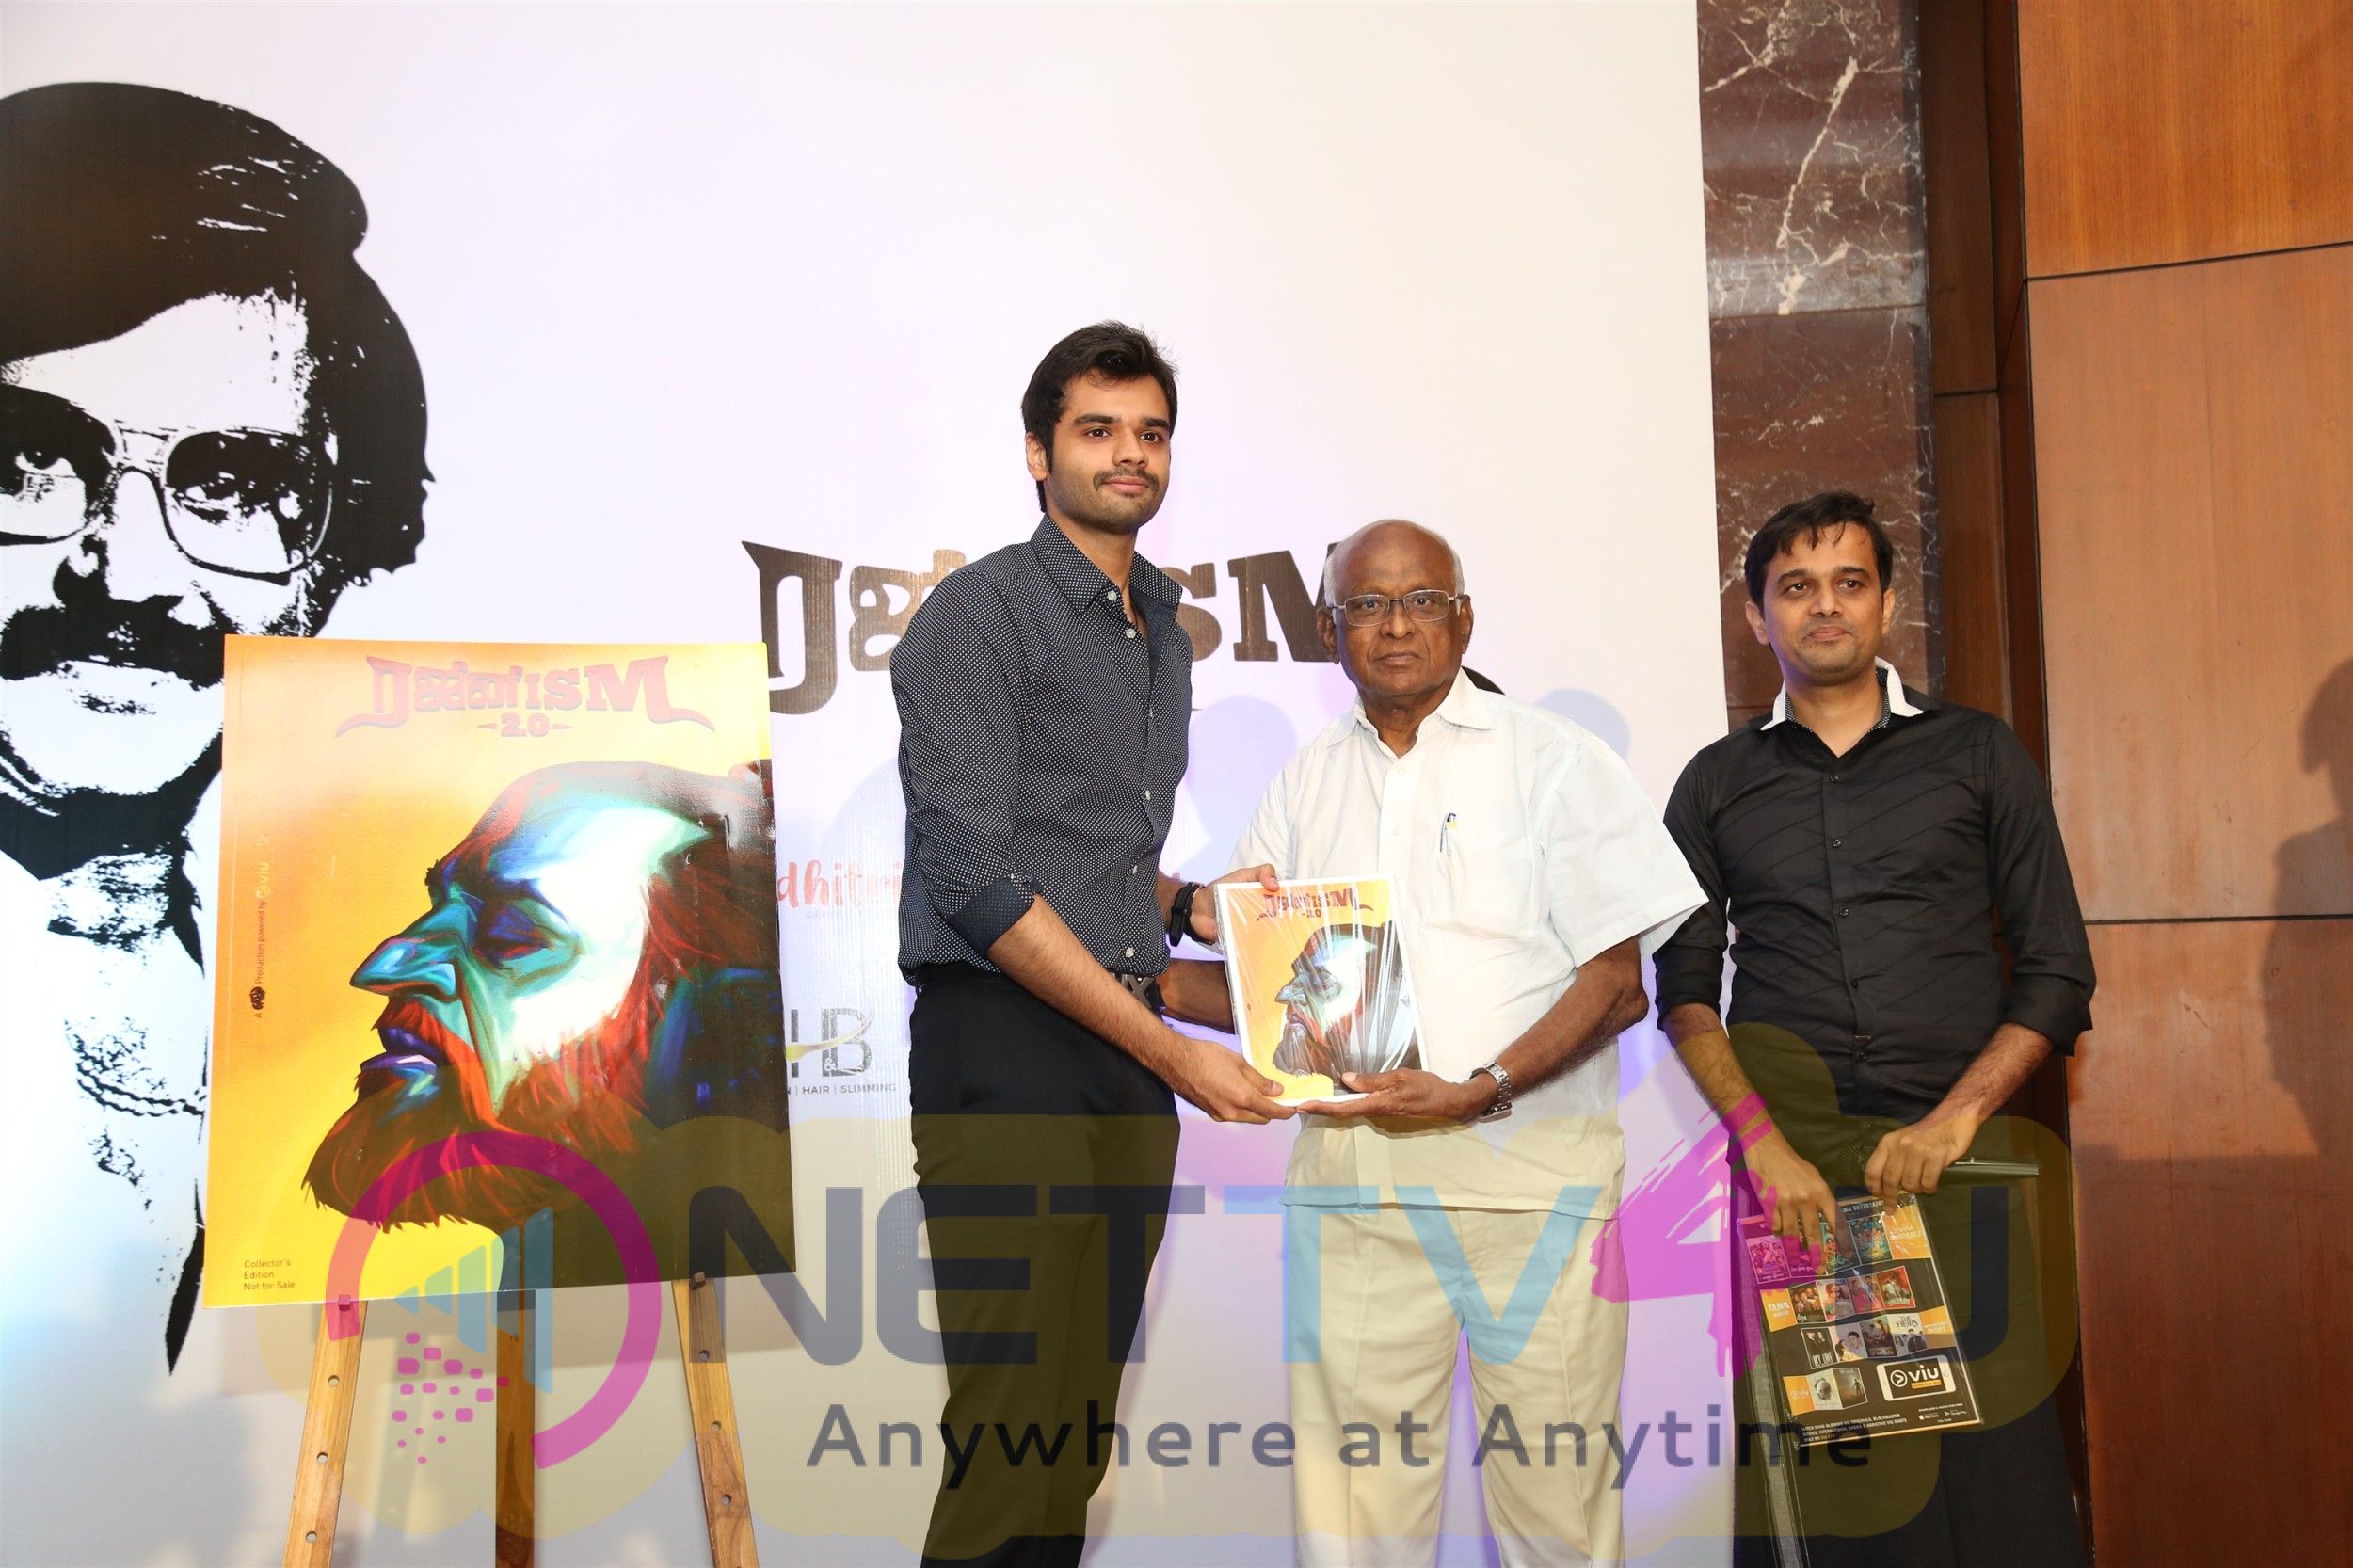 Rajinism 2.0 Book Launch Pics Tamil Gallery